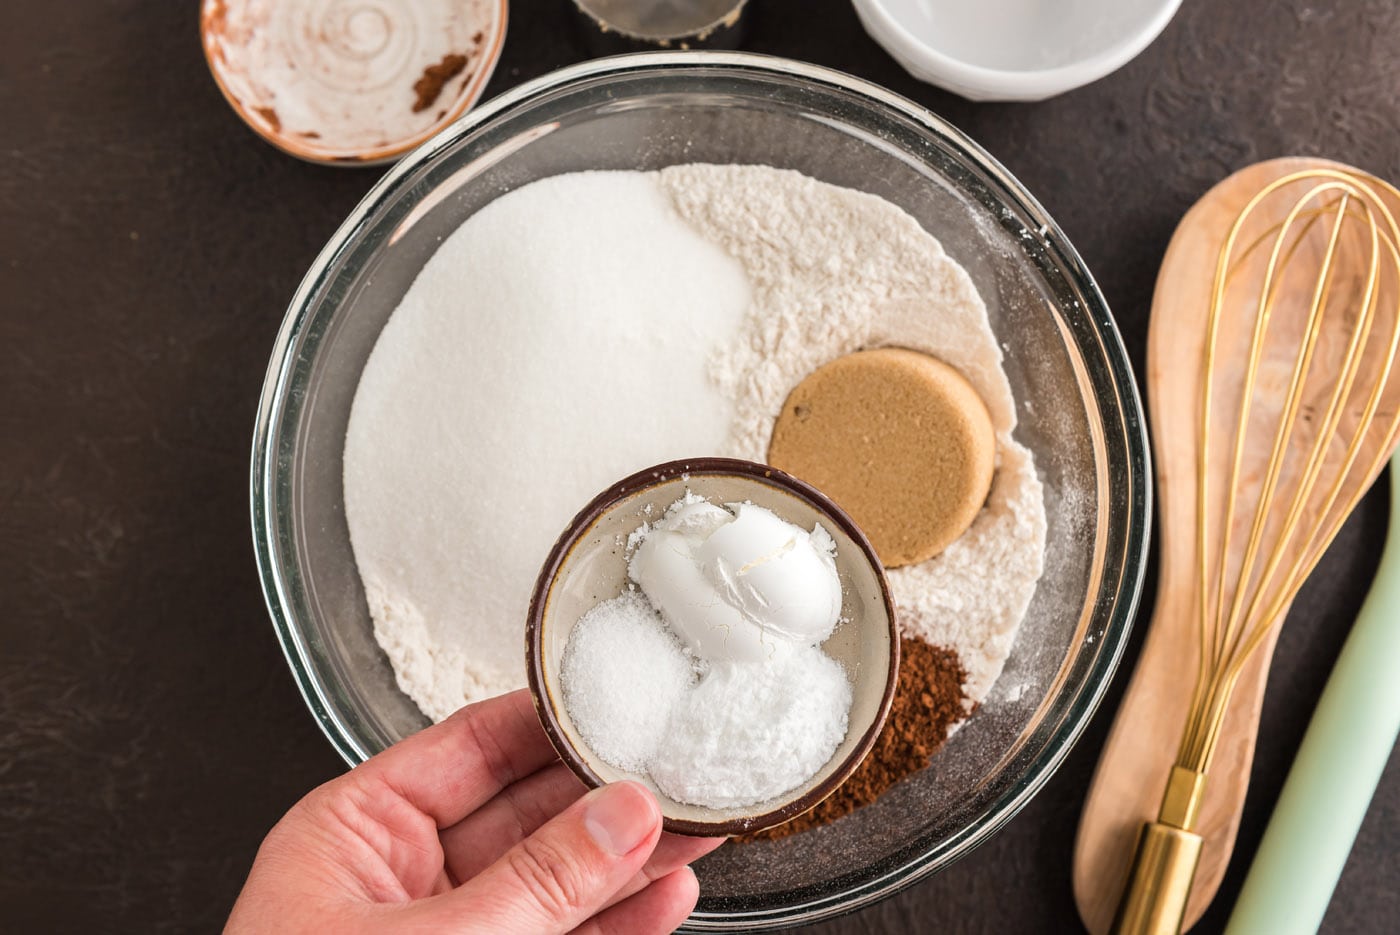 flour, sugar, cocoa powder, salt, baking powder and baking soda added to bowl